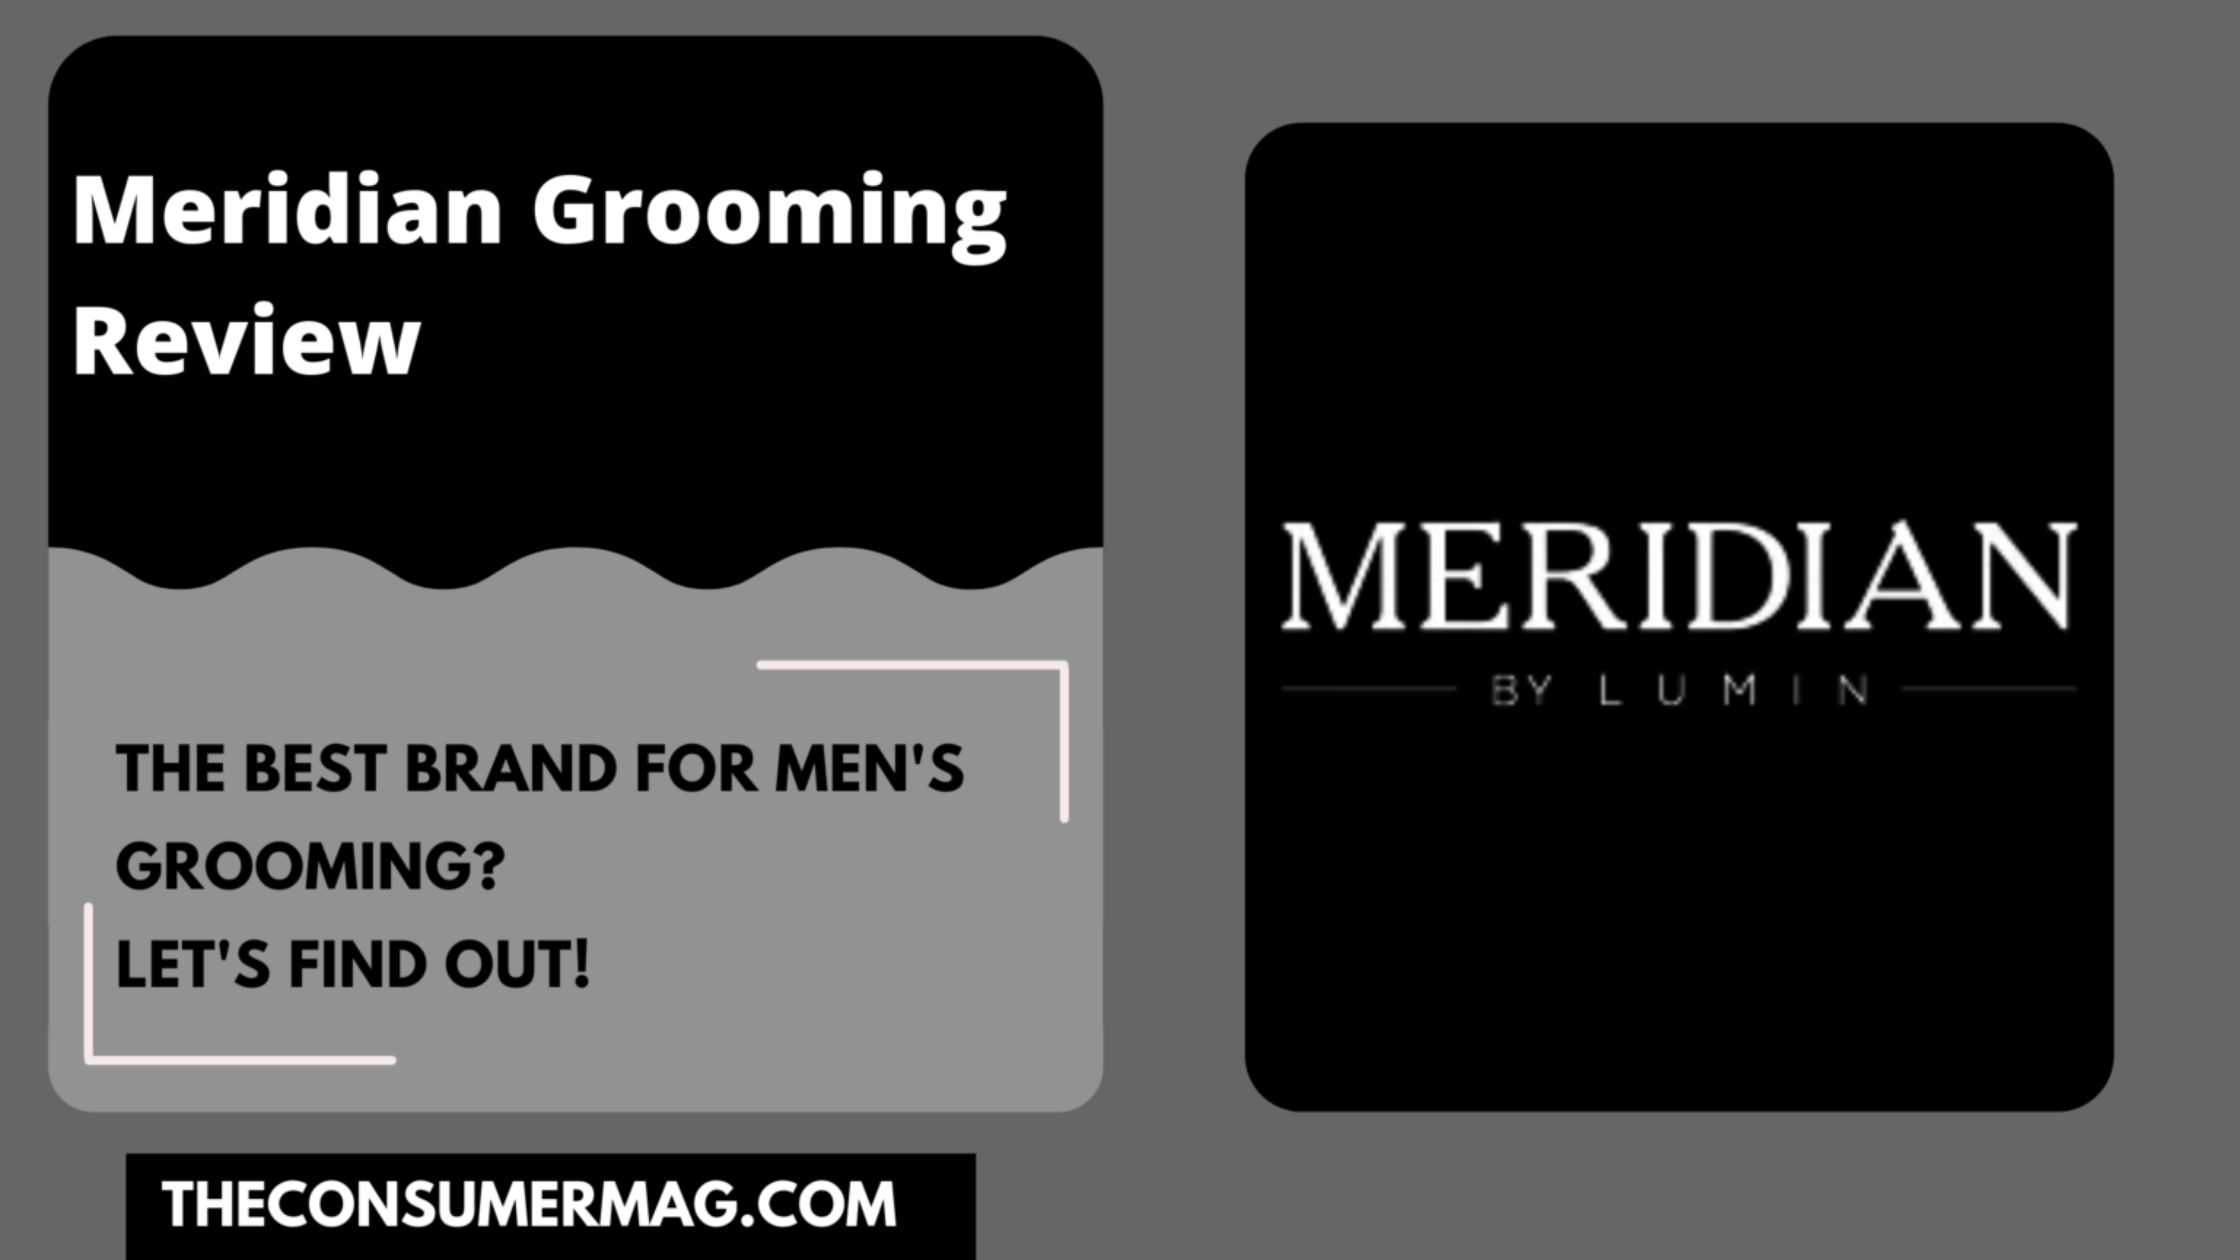 Meridian Grooming featured image